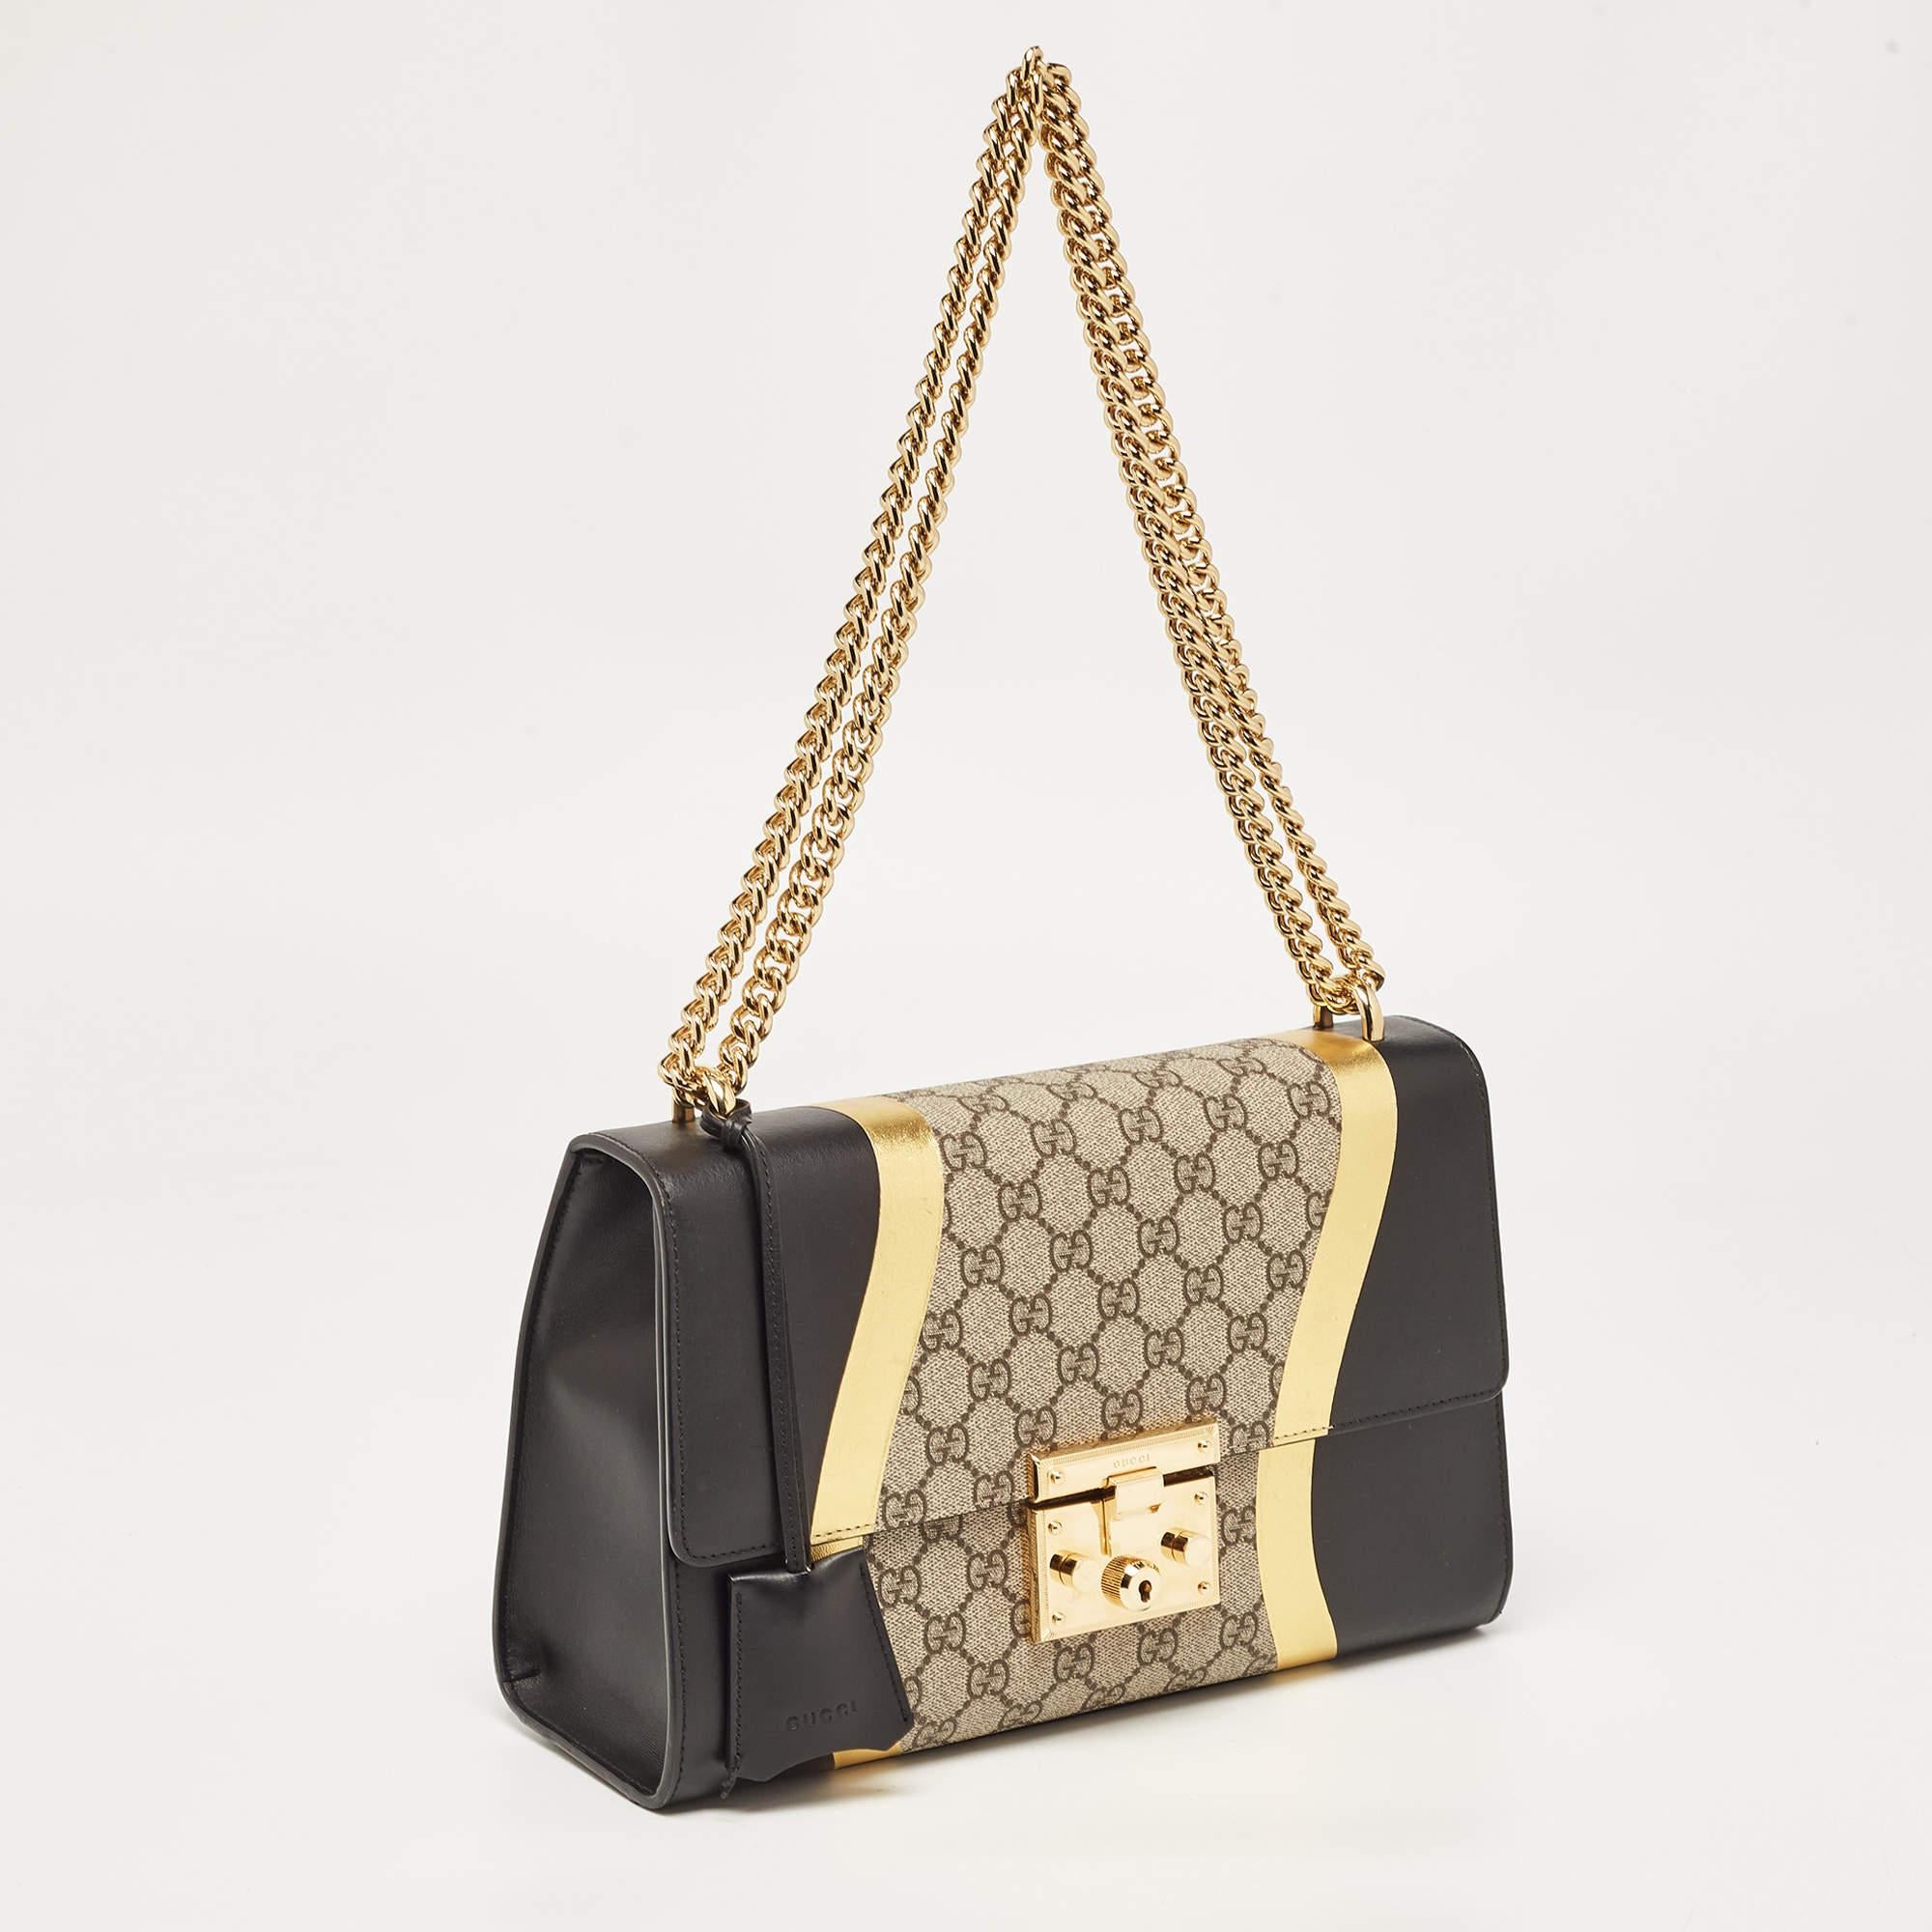 Gucci Tricolor GG Supreme Canvas and Leather Medium Padlock Shoulder Bag In Good Condition For Sale In Dubai, Al Qouz 2